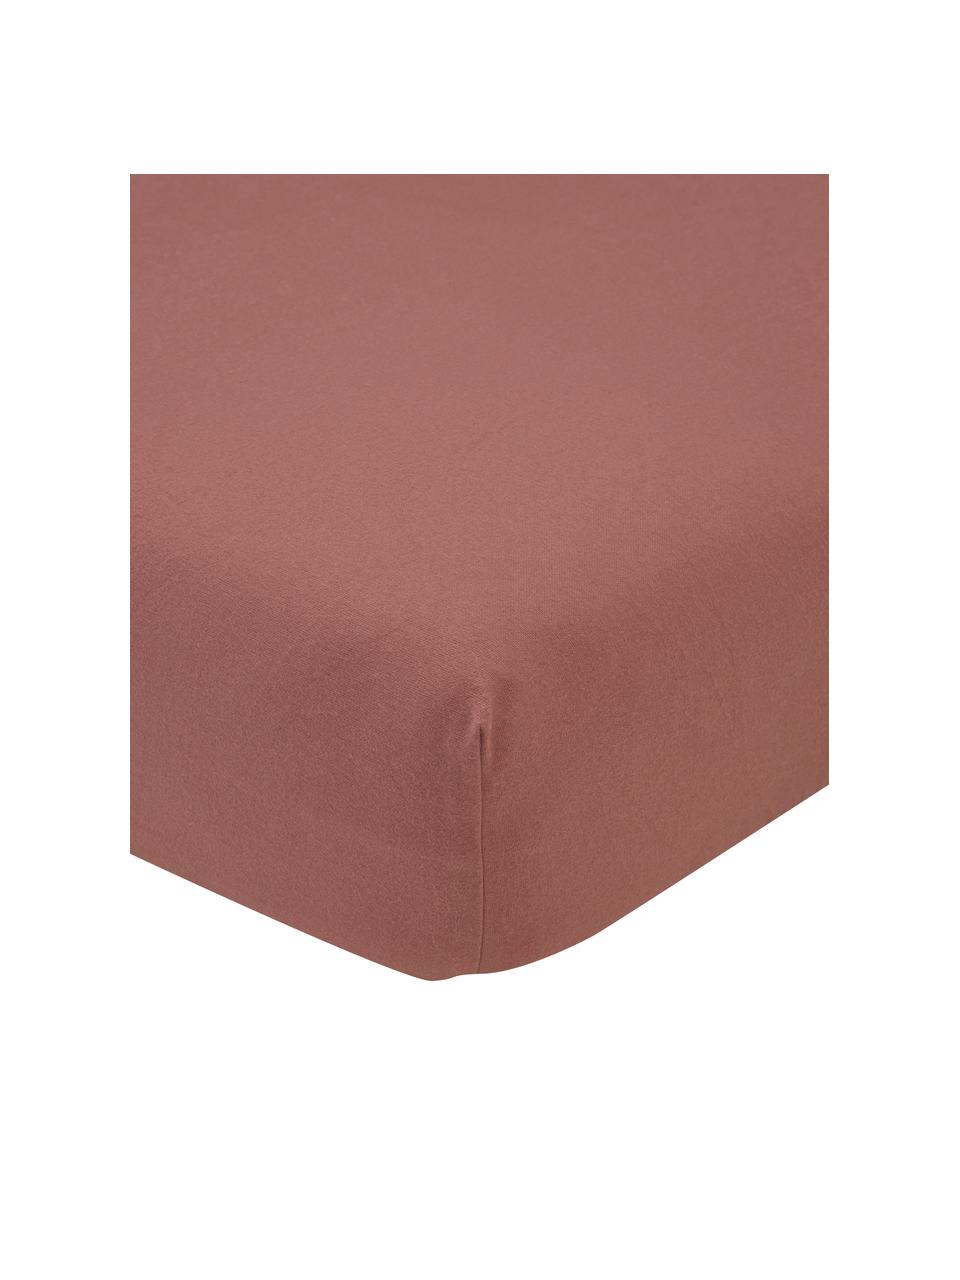 Flanellen hoeslaken Erica in oudroze, Weeftechniek: flanel Standaard kwalitei, Roze, 180 x 200 cm